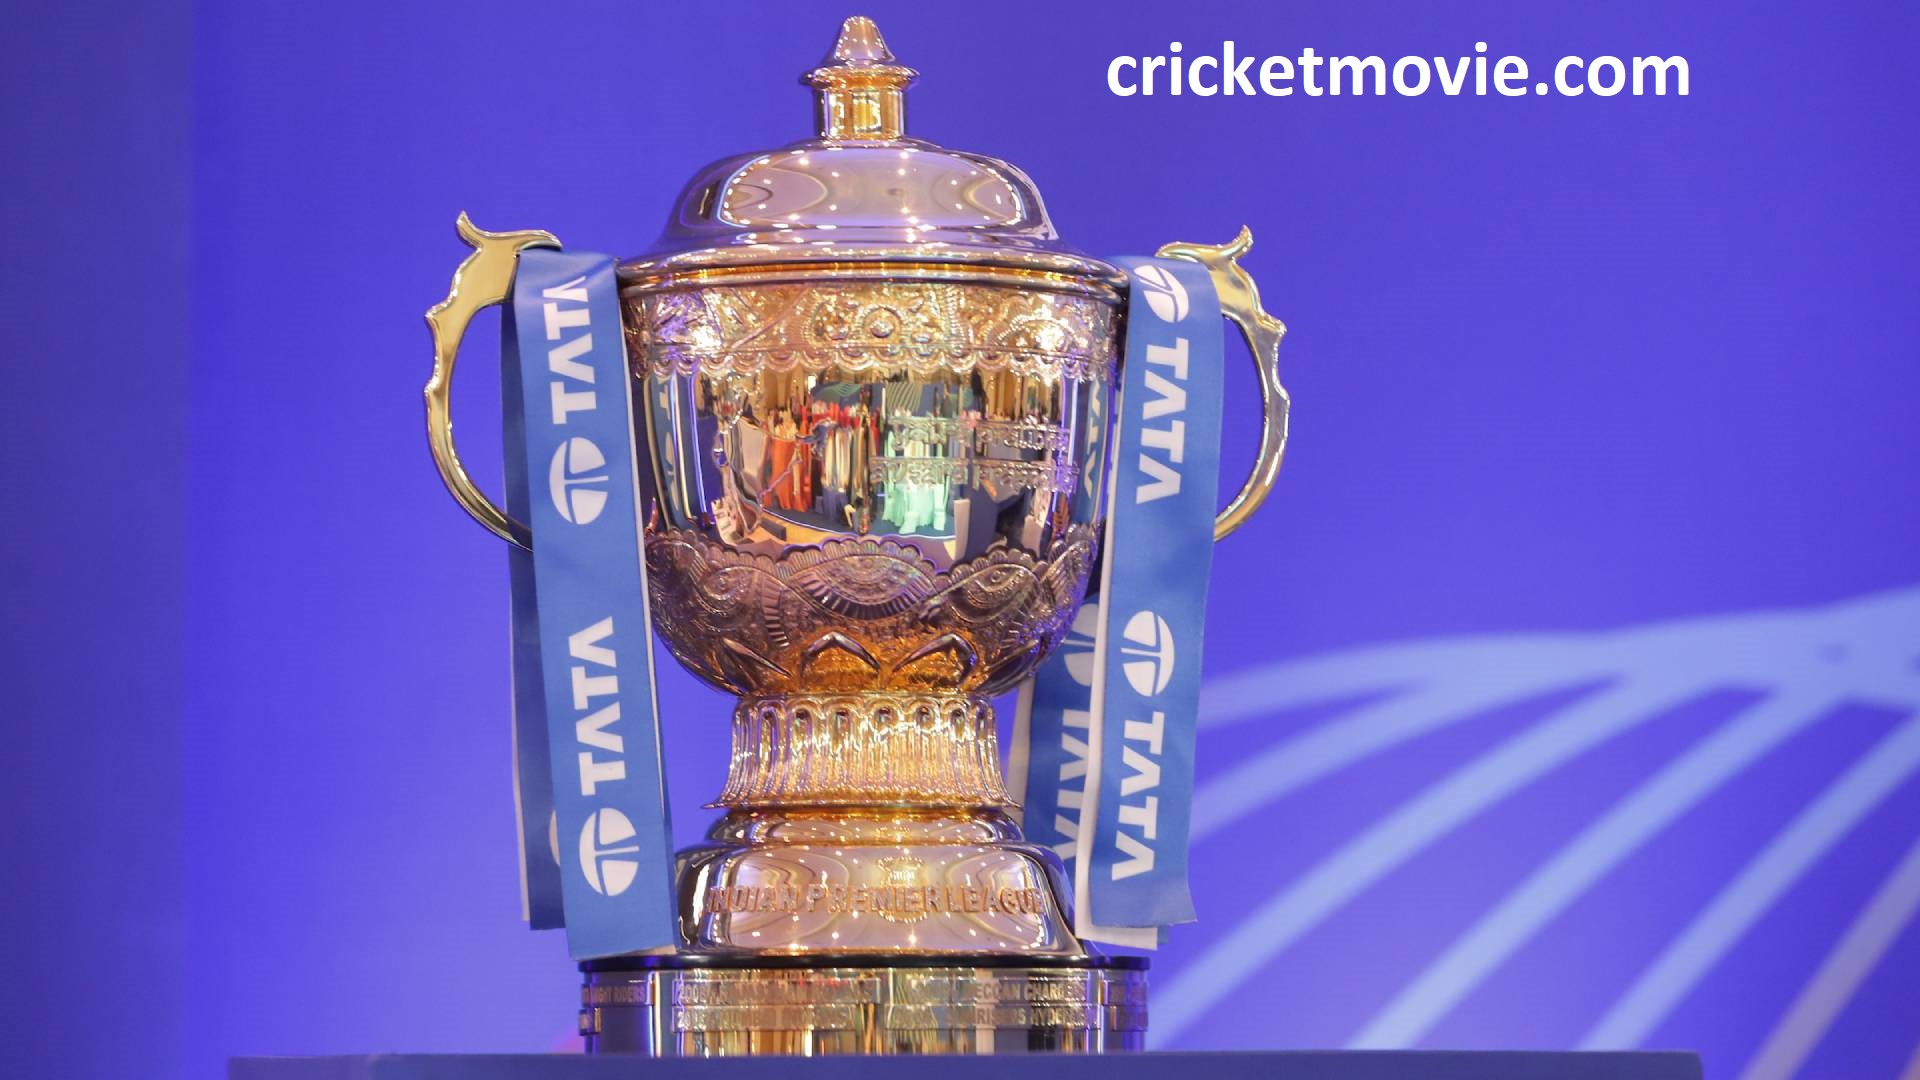 Tata IPL 2022-cricketmovie.com